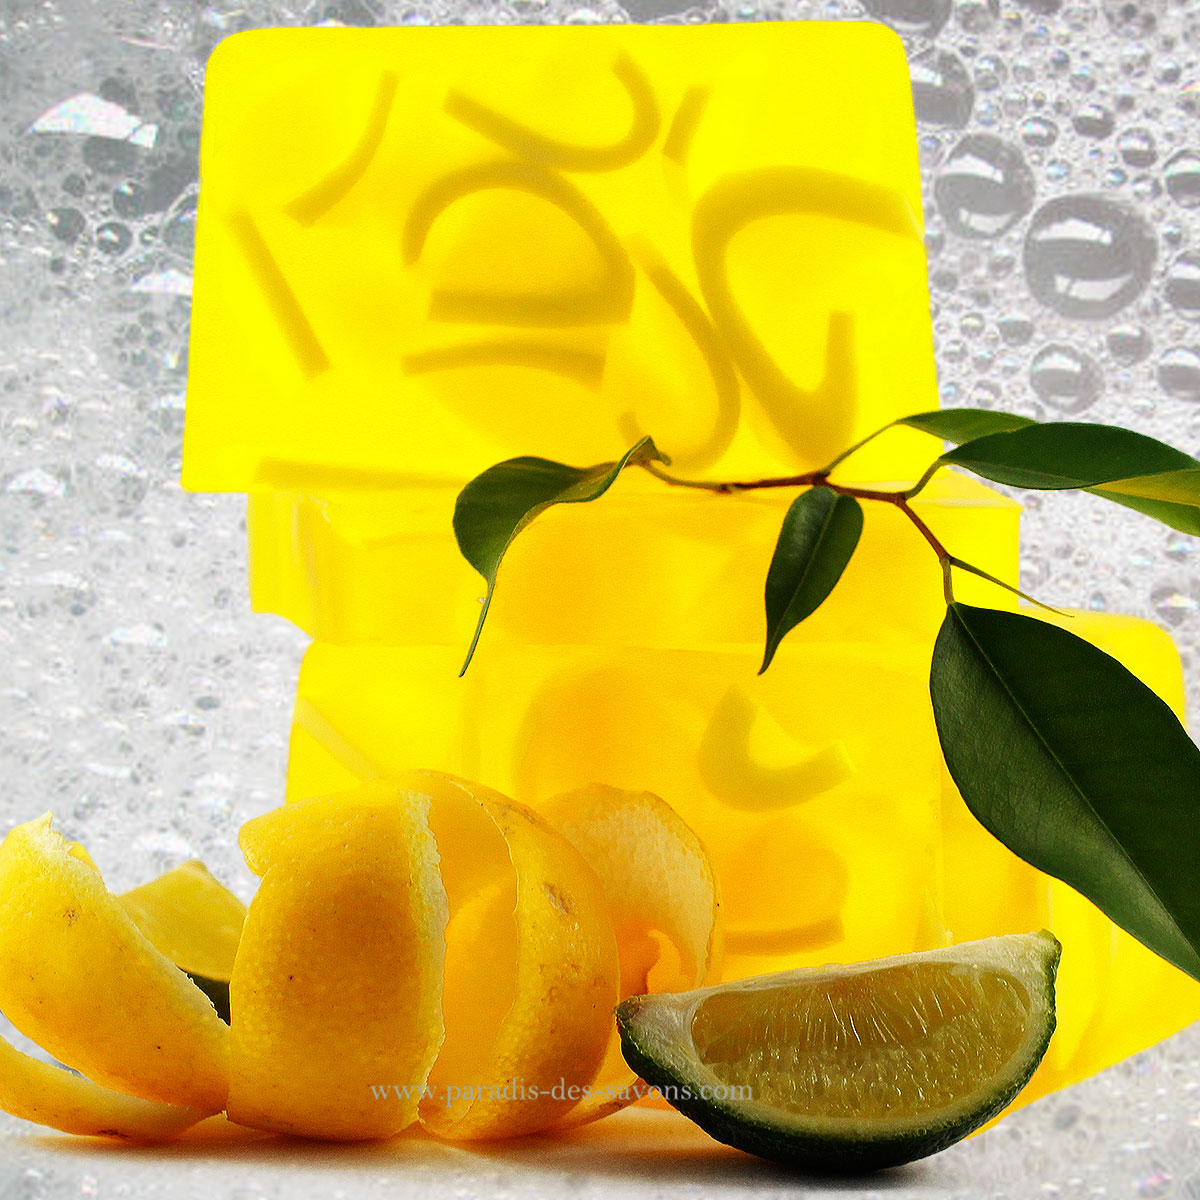 Savon au citron